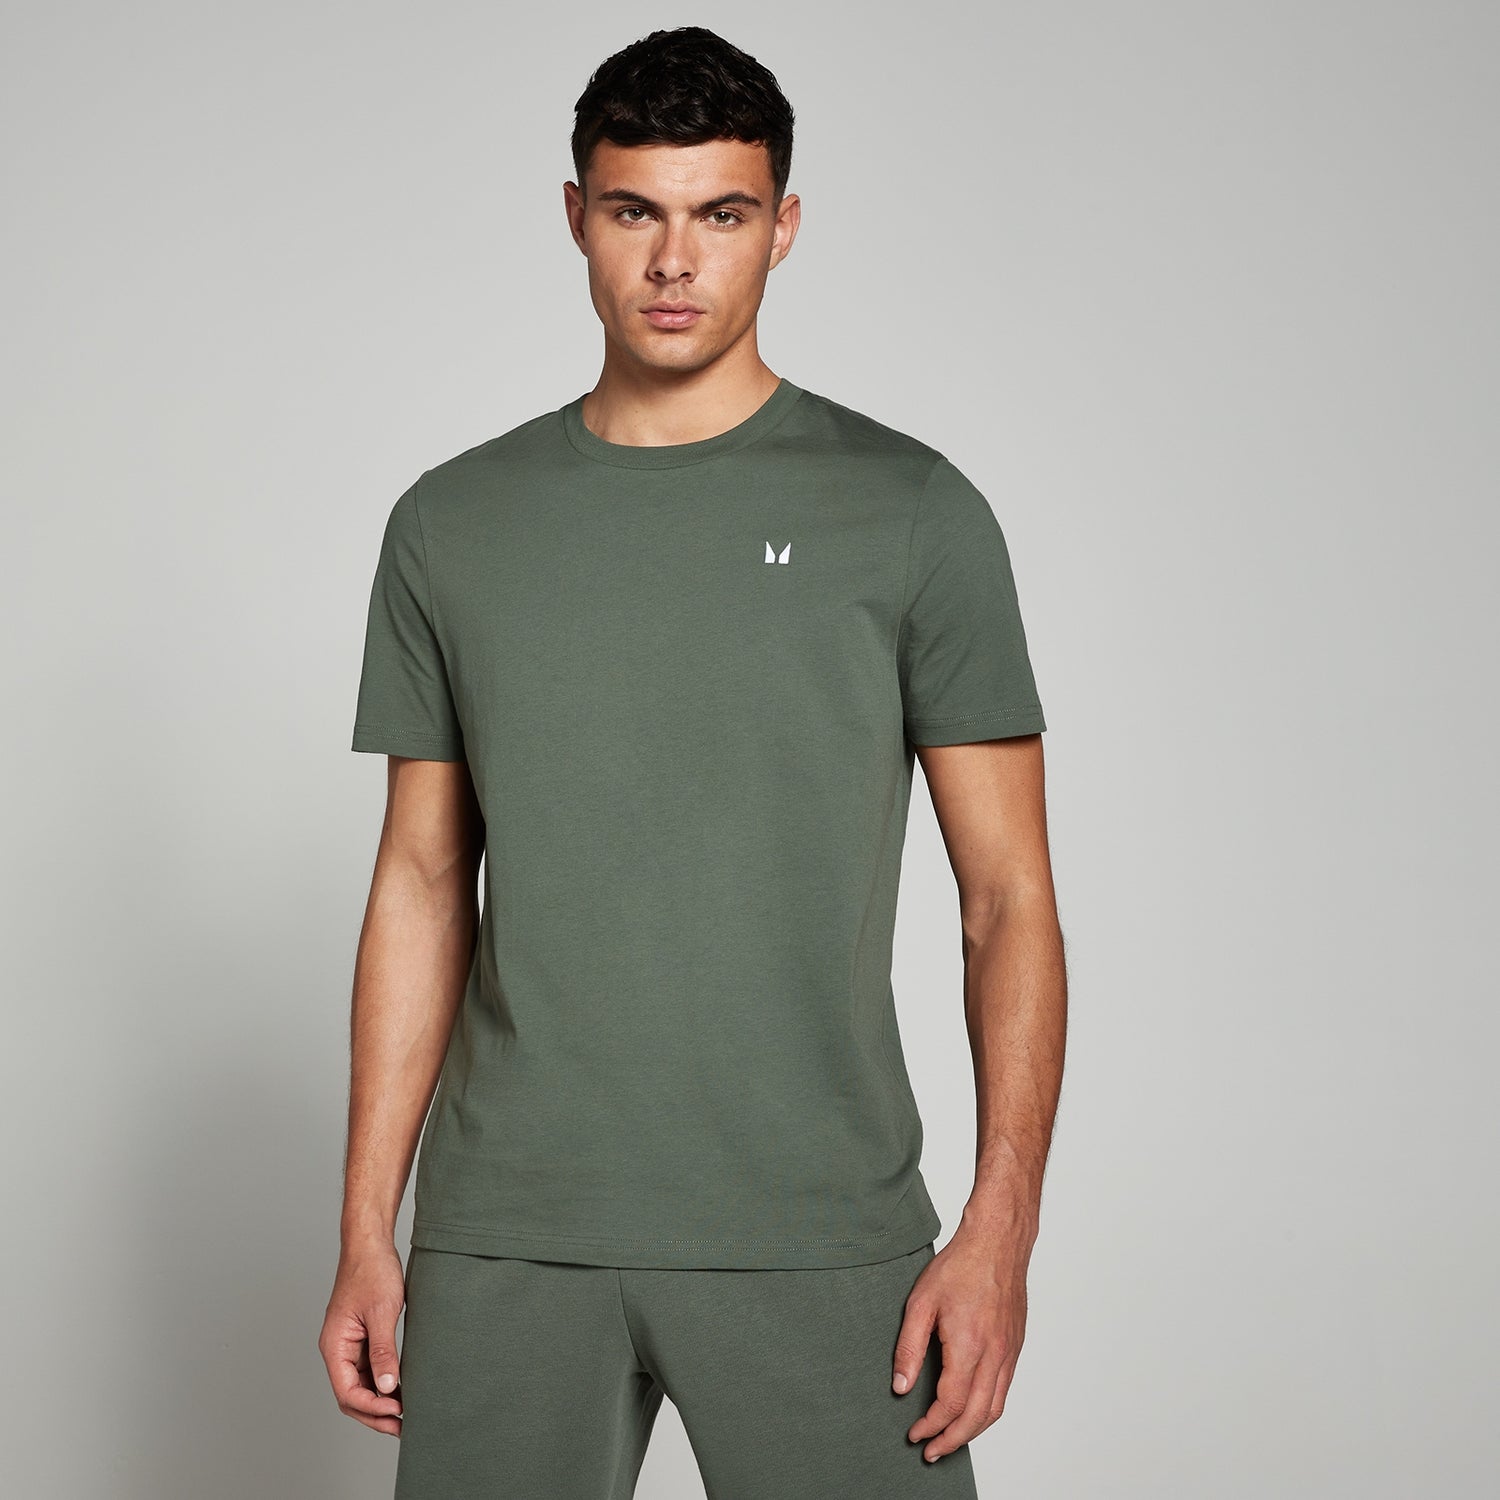 MP Men's Basics Short Sleeve T-Shirt - Thyme - XS